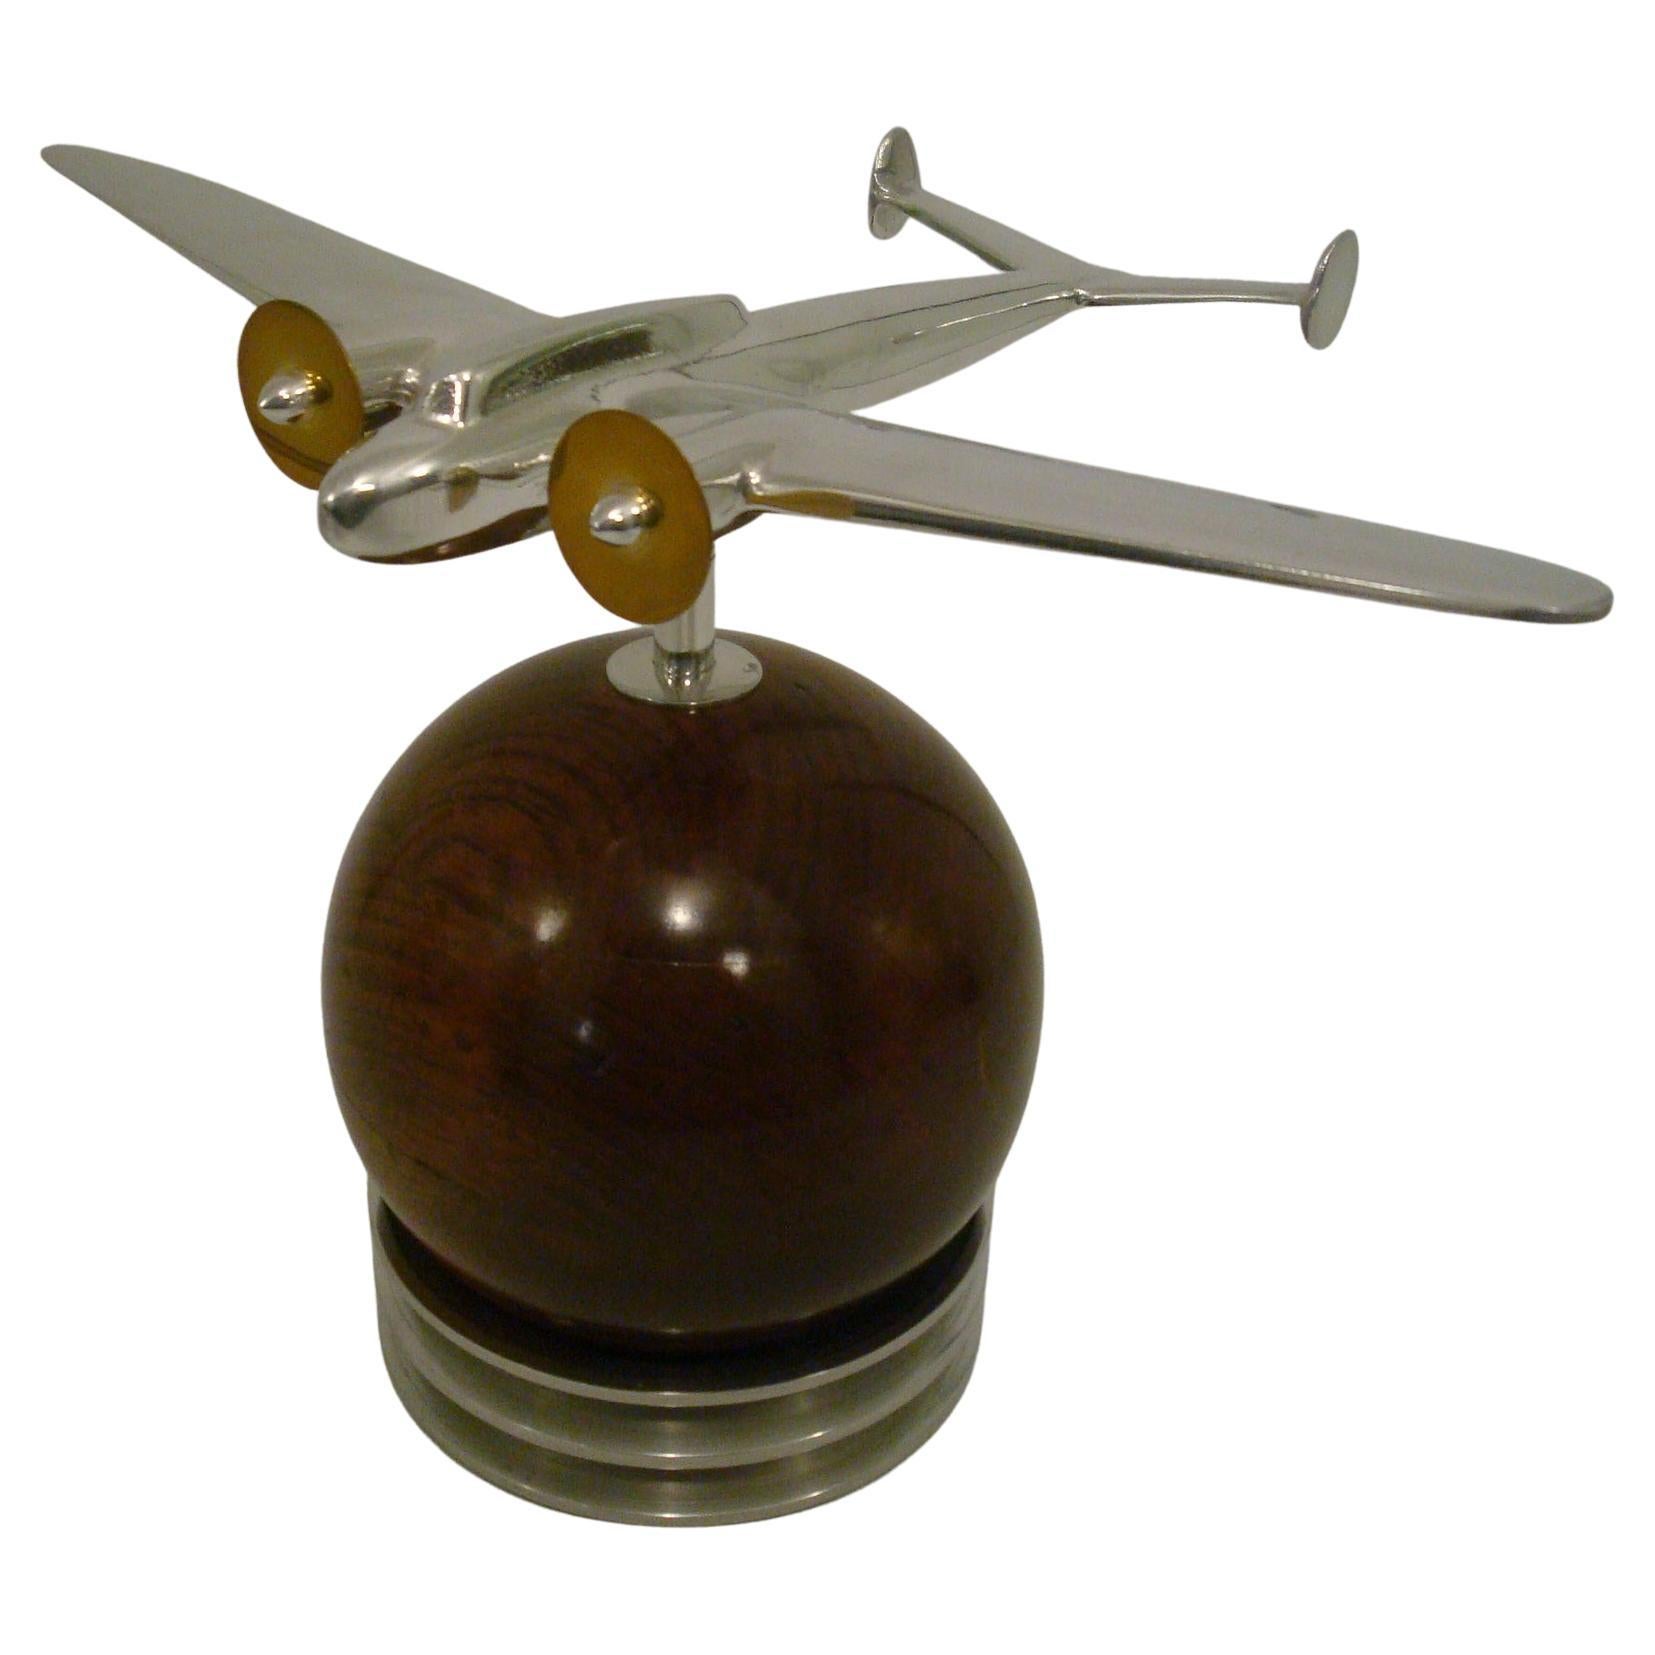 Art Deco / Modernism / Vintage Airplane Desk Model, ca. 1930´s